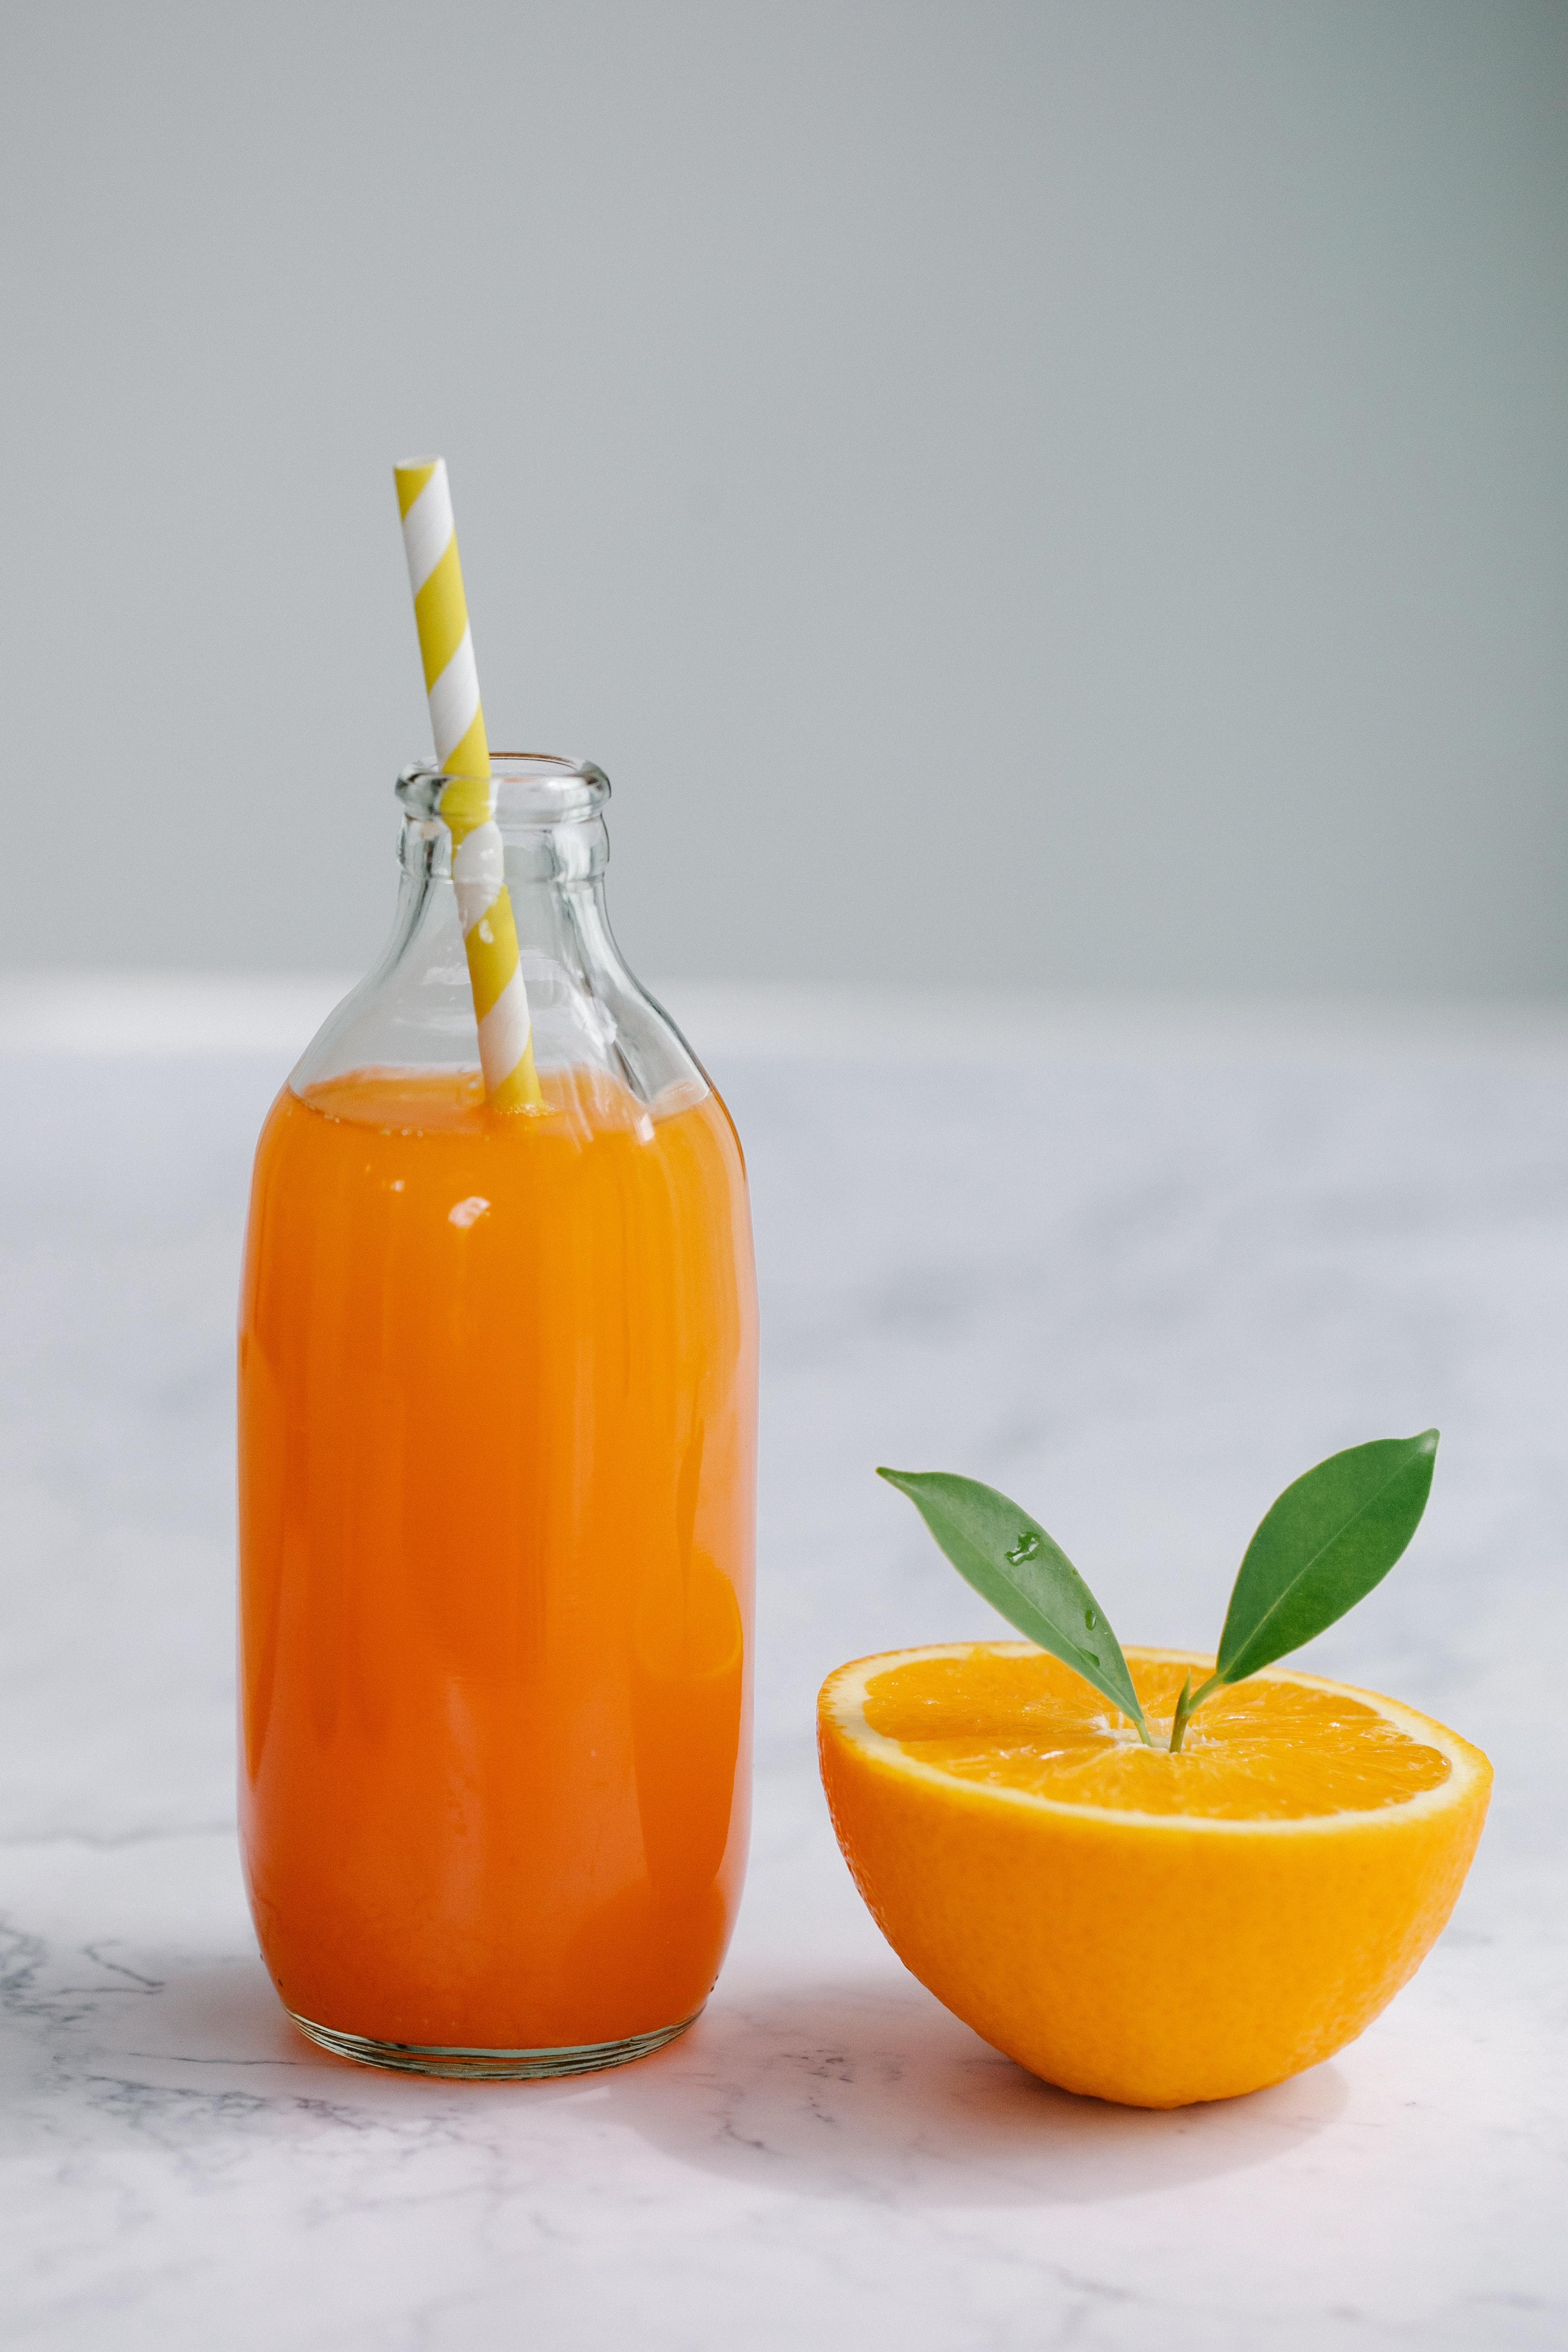 Can Advil be taken with orange juice? 